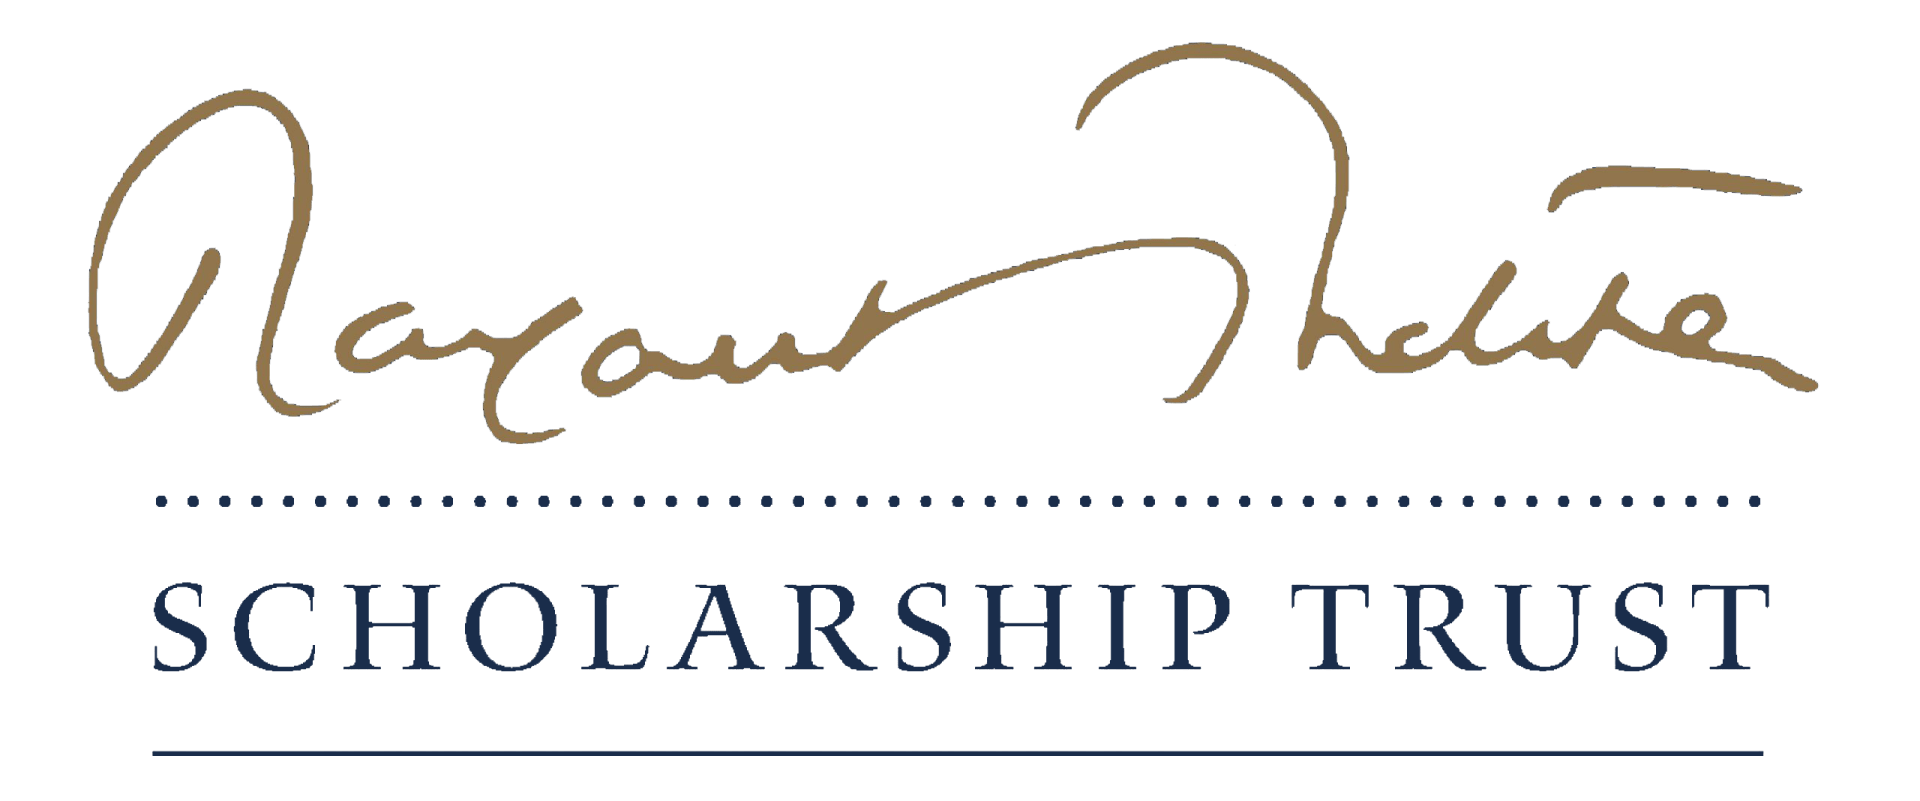 Margret Thatcher Scholarship Trust